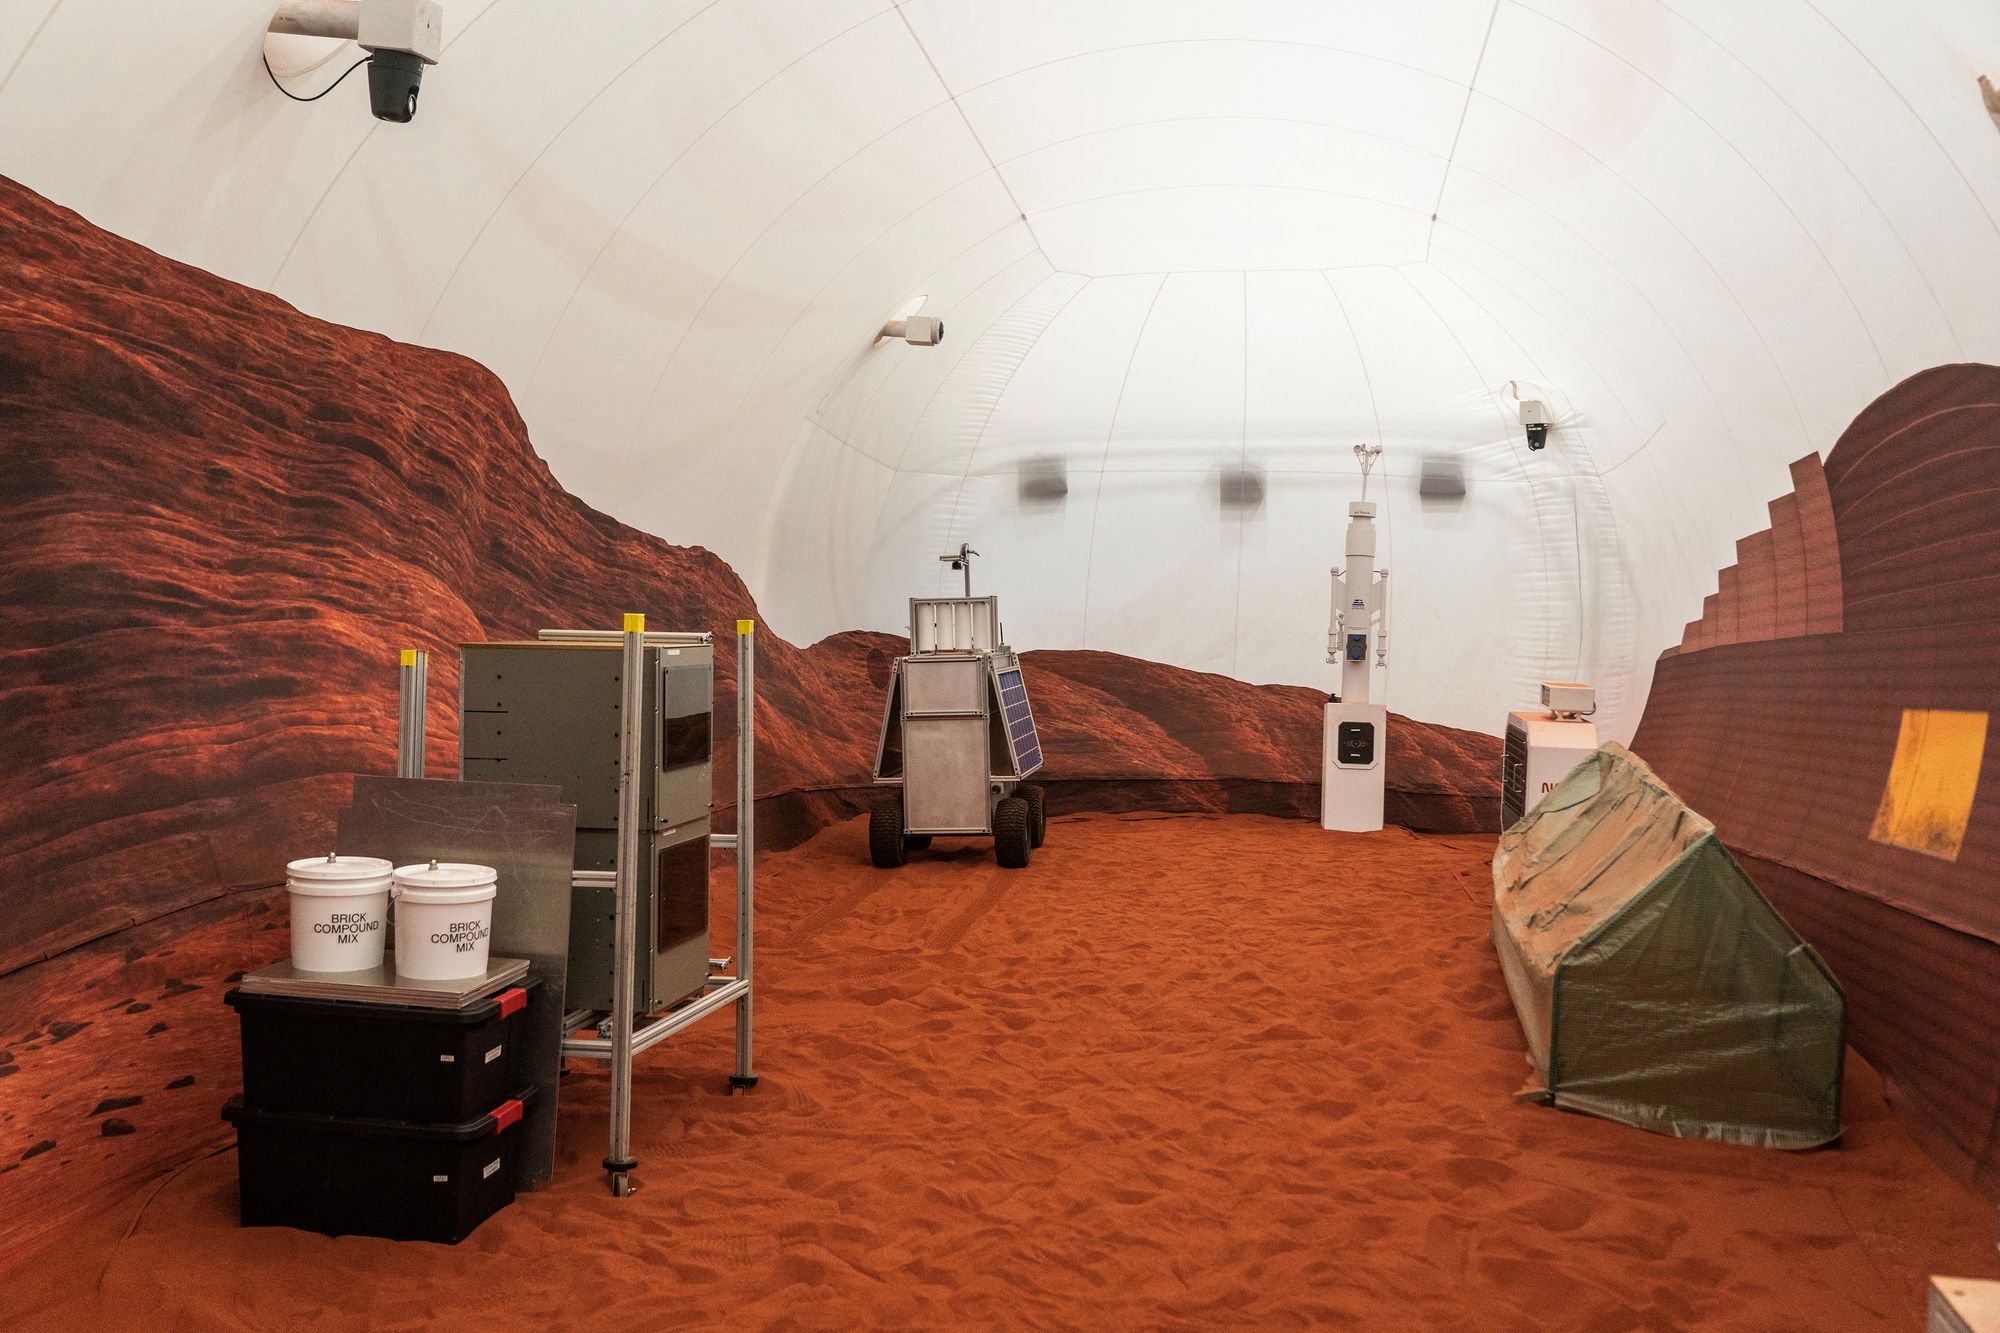 NASA Mars simulation habitat